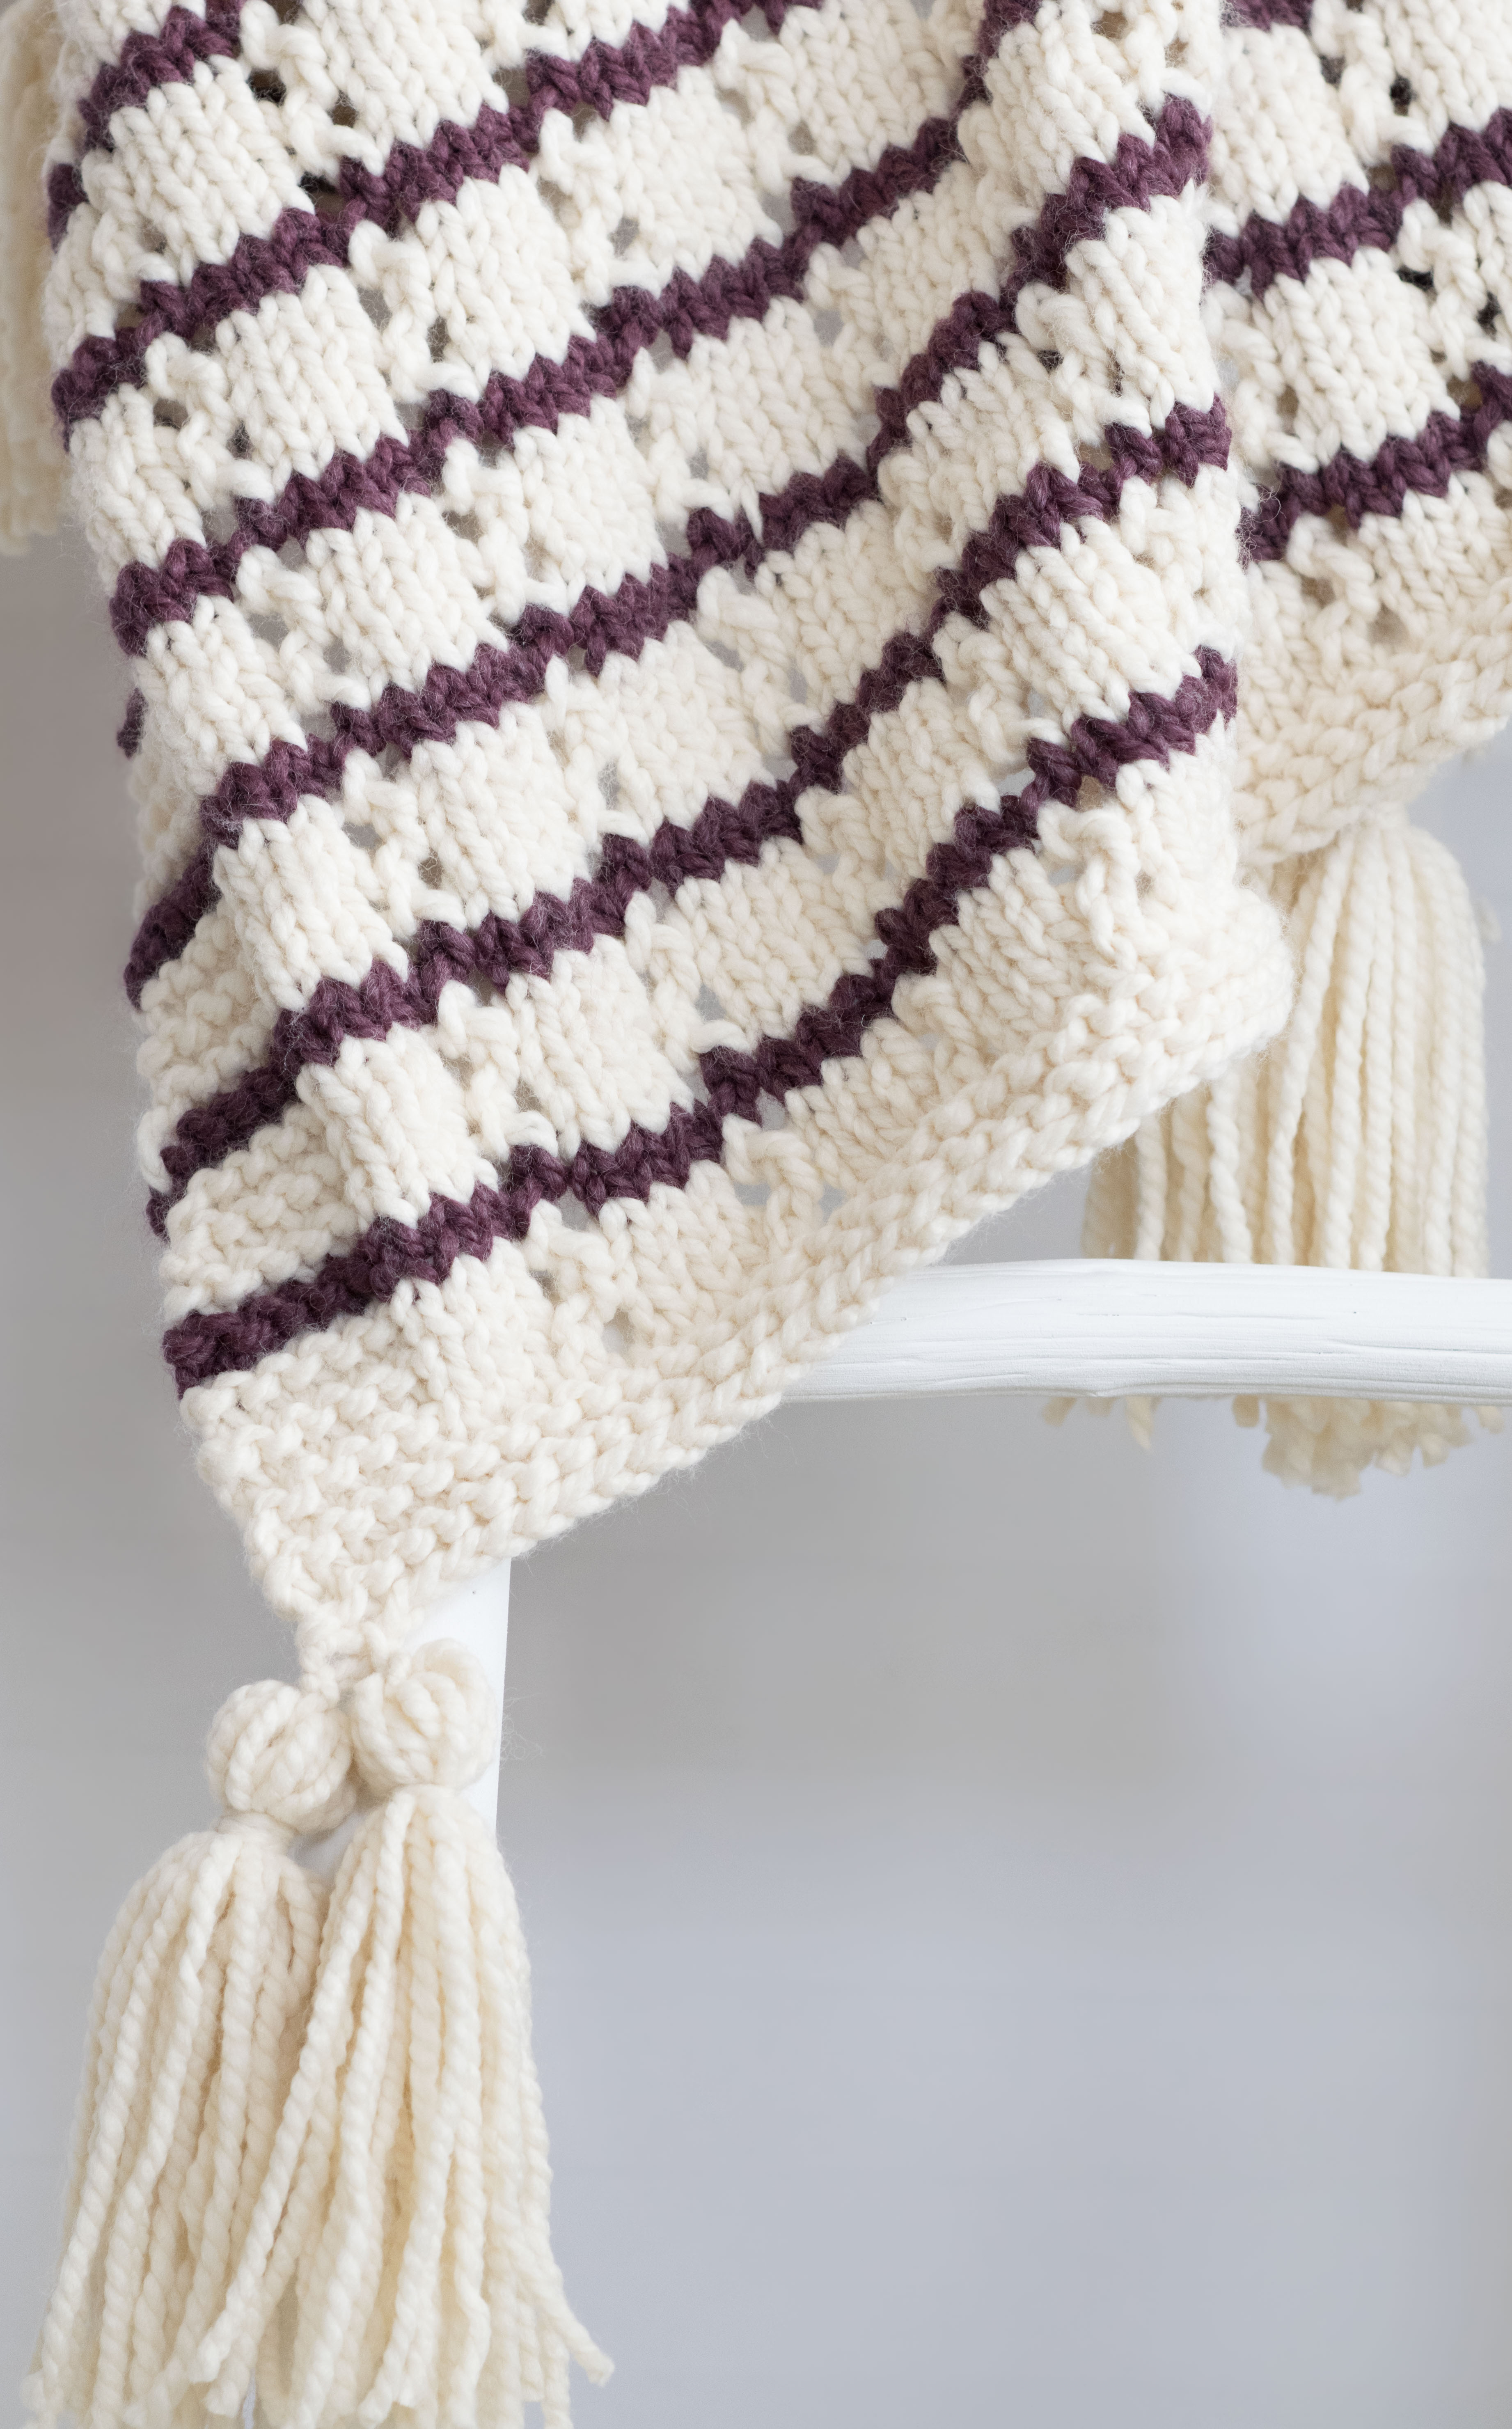 Bulky yarn afghan knitting patterns